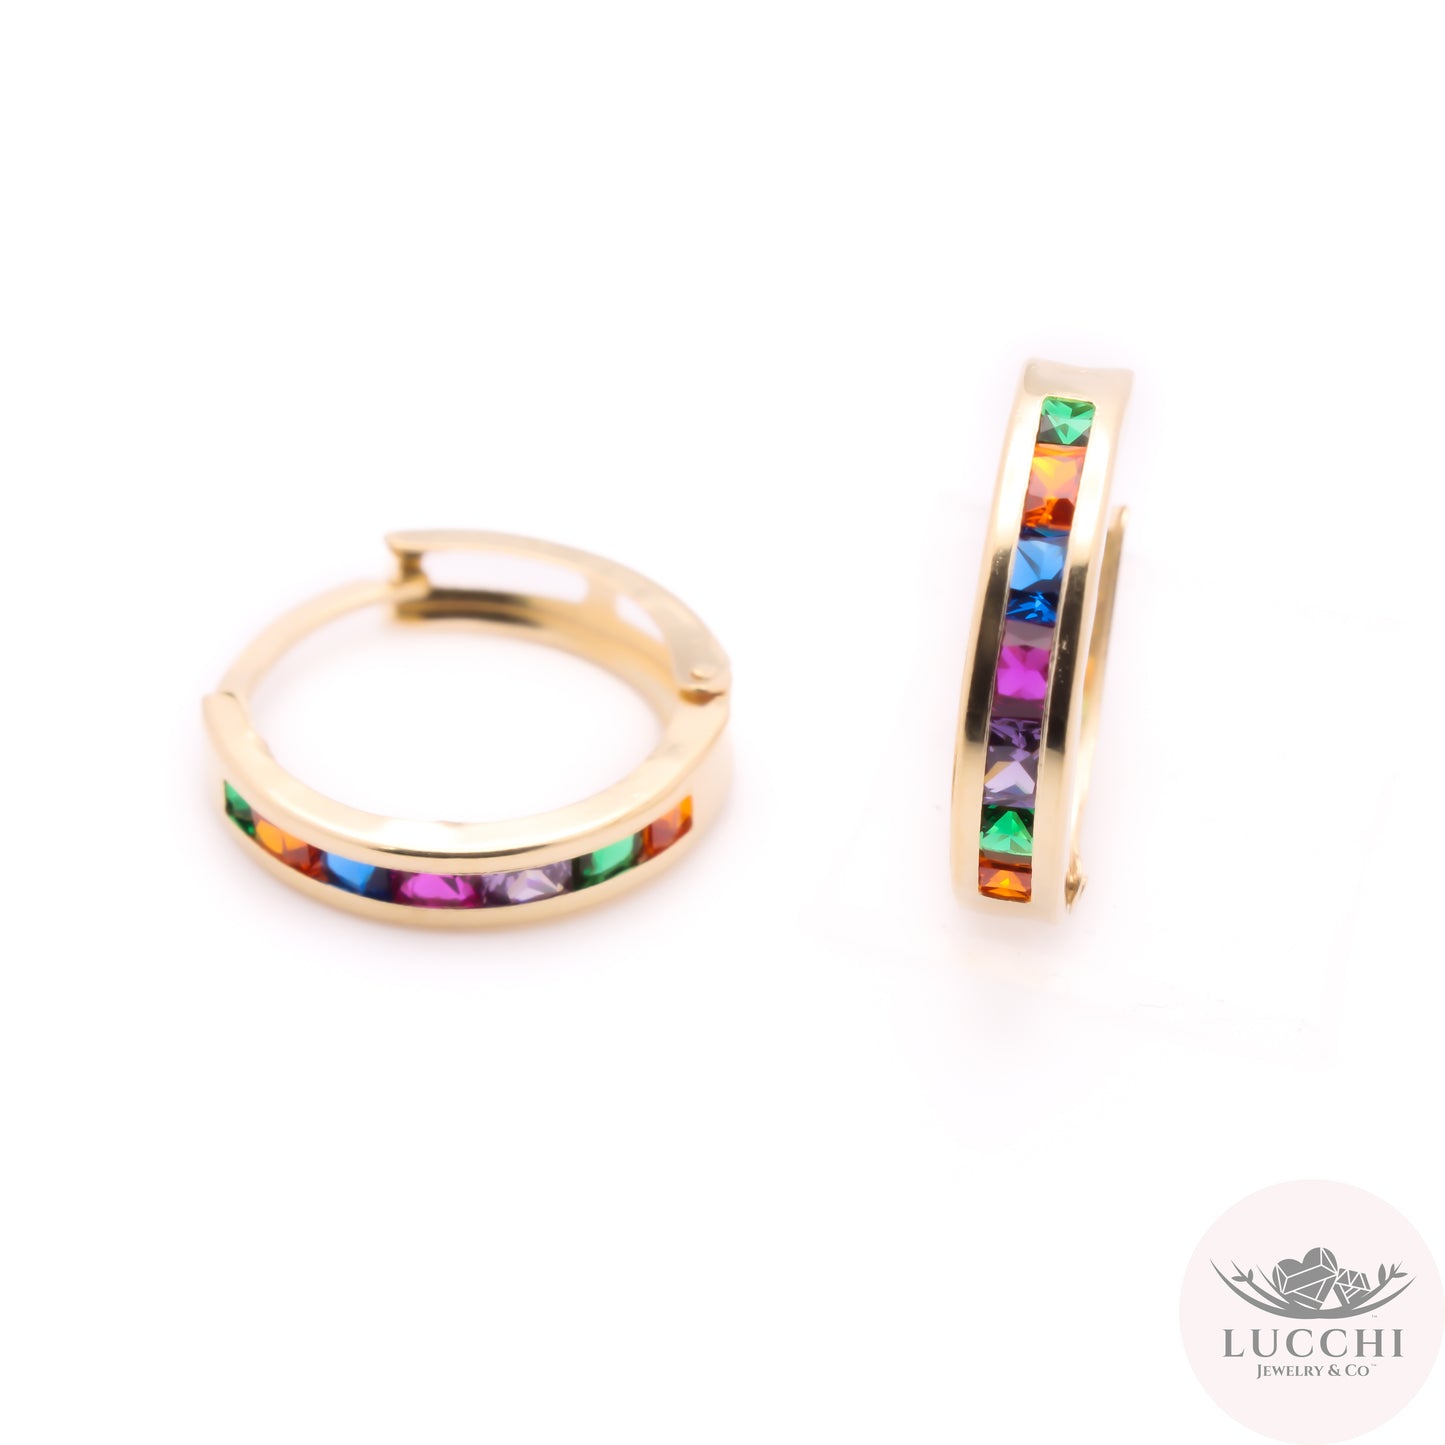 Rainbow Huggies Earrings - Emerald Cuts- 14k